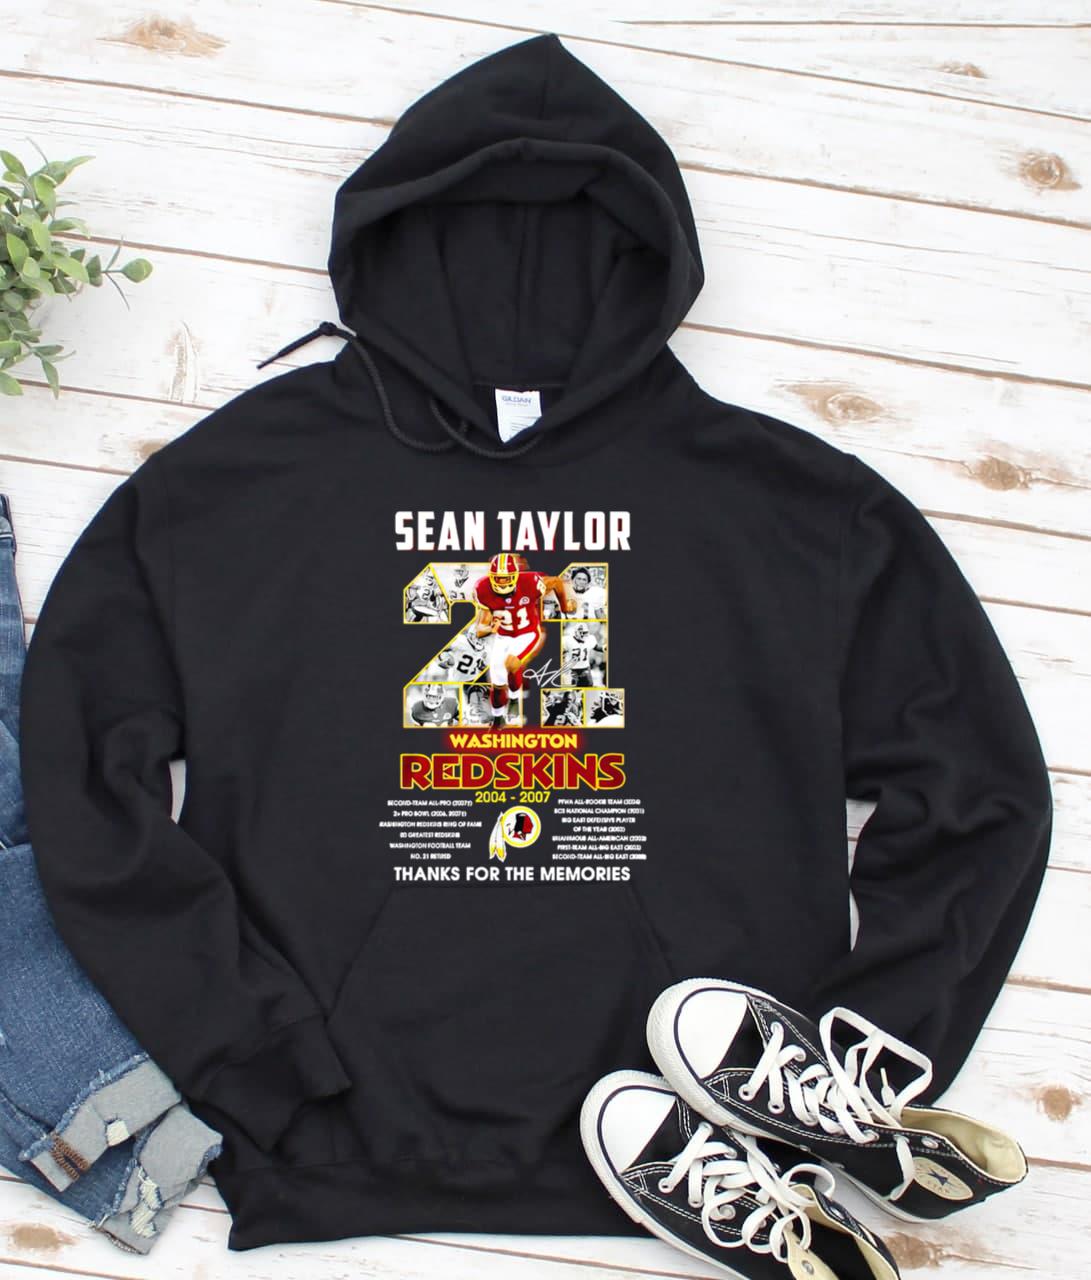 Sean Taylor Washington Redskins Signature T-Shirt